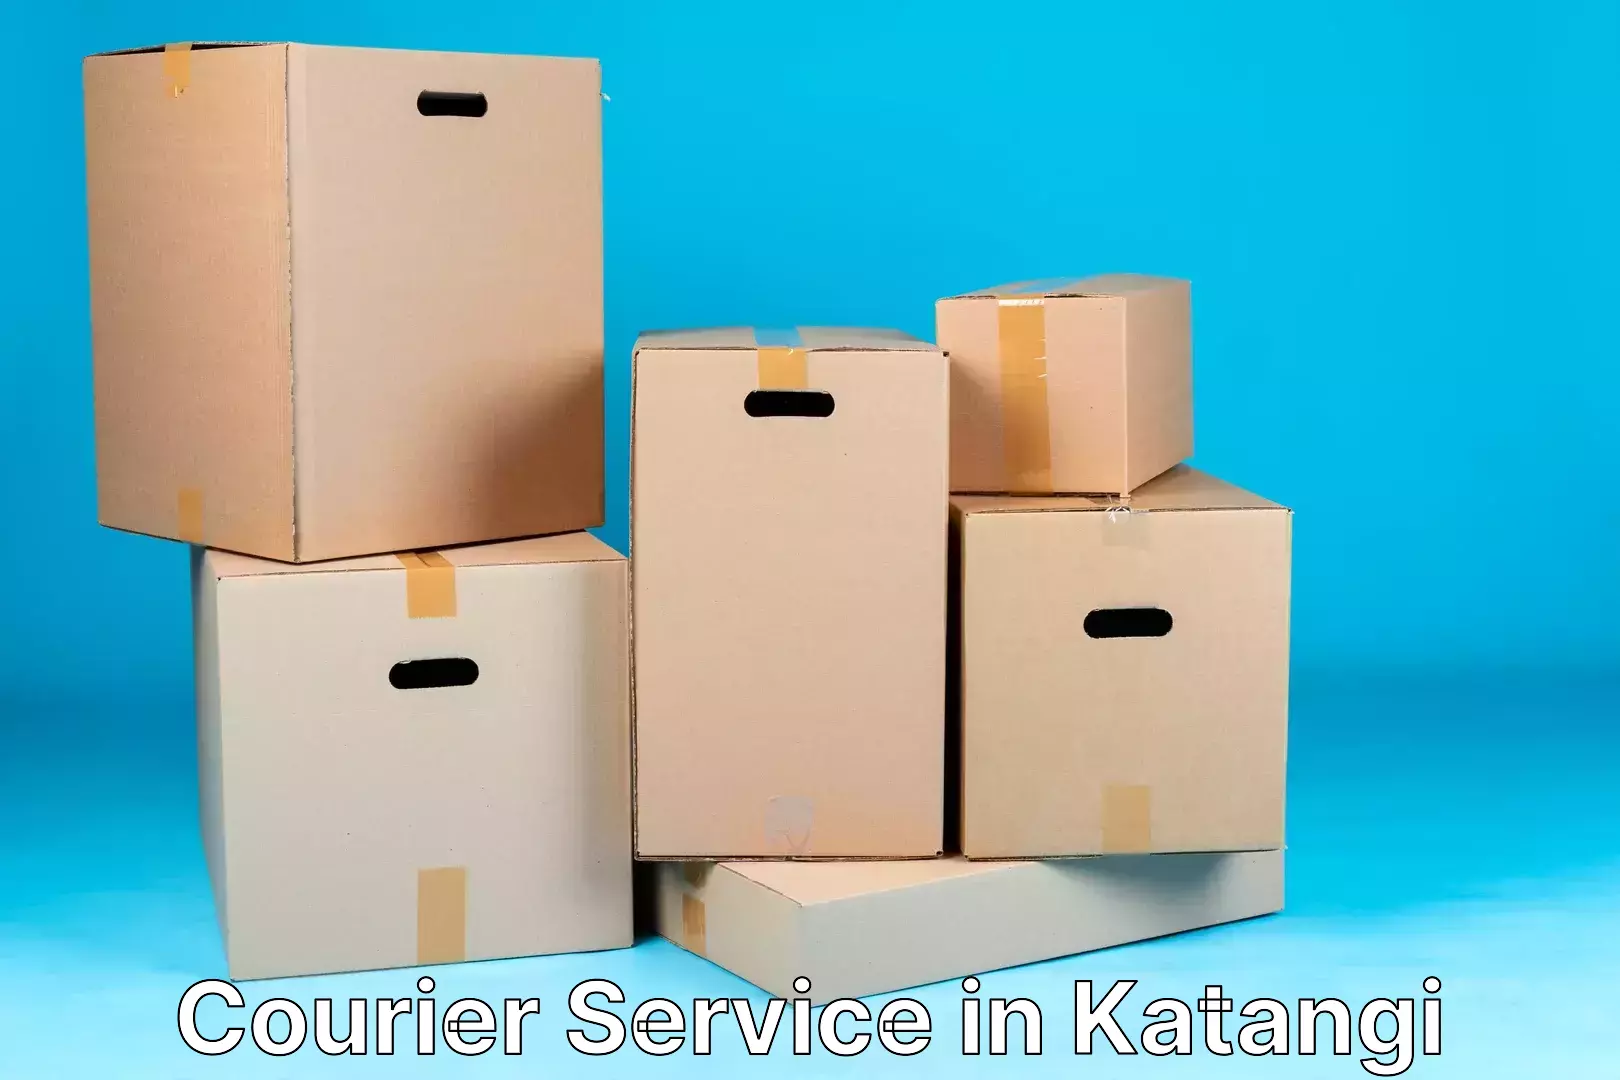 Enhanced shipping experience in Katangi